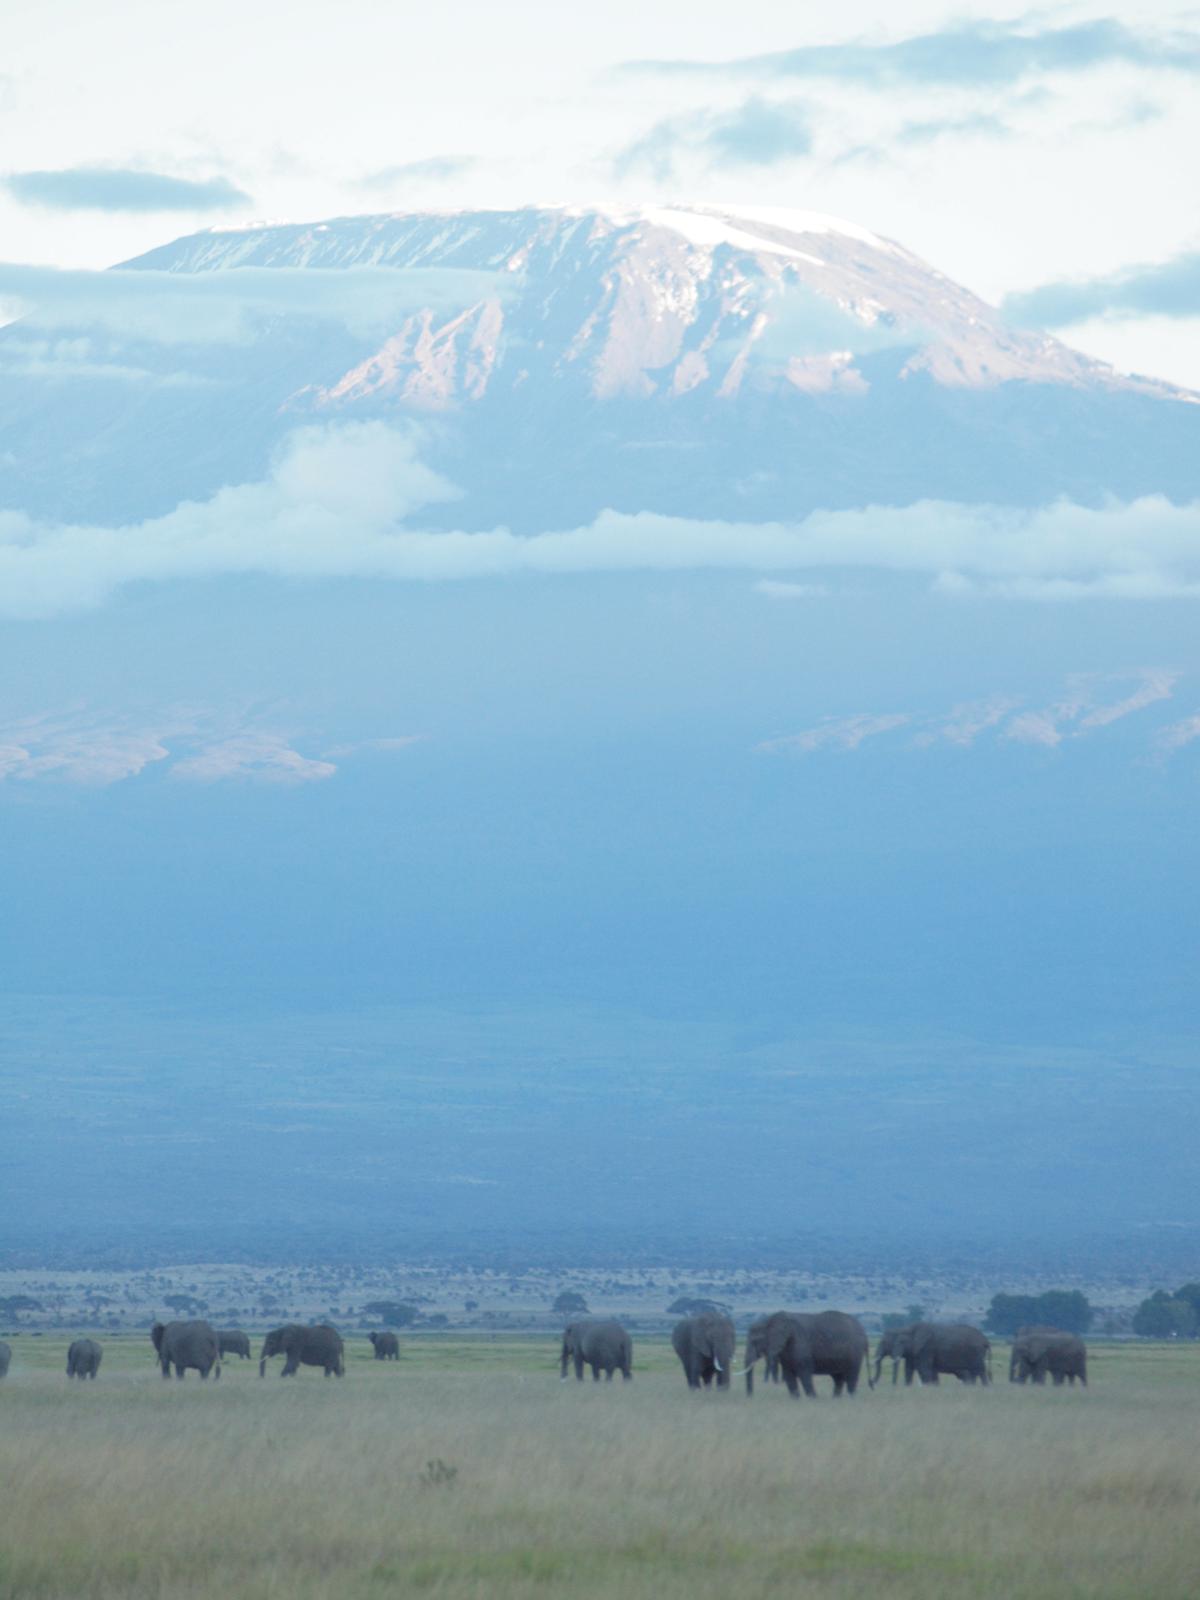 Mount Kilimanjaro, not 20 miles away across the border in Tanzania, rises above Amboseli. (Kevin Revolinski)